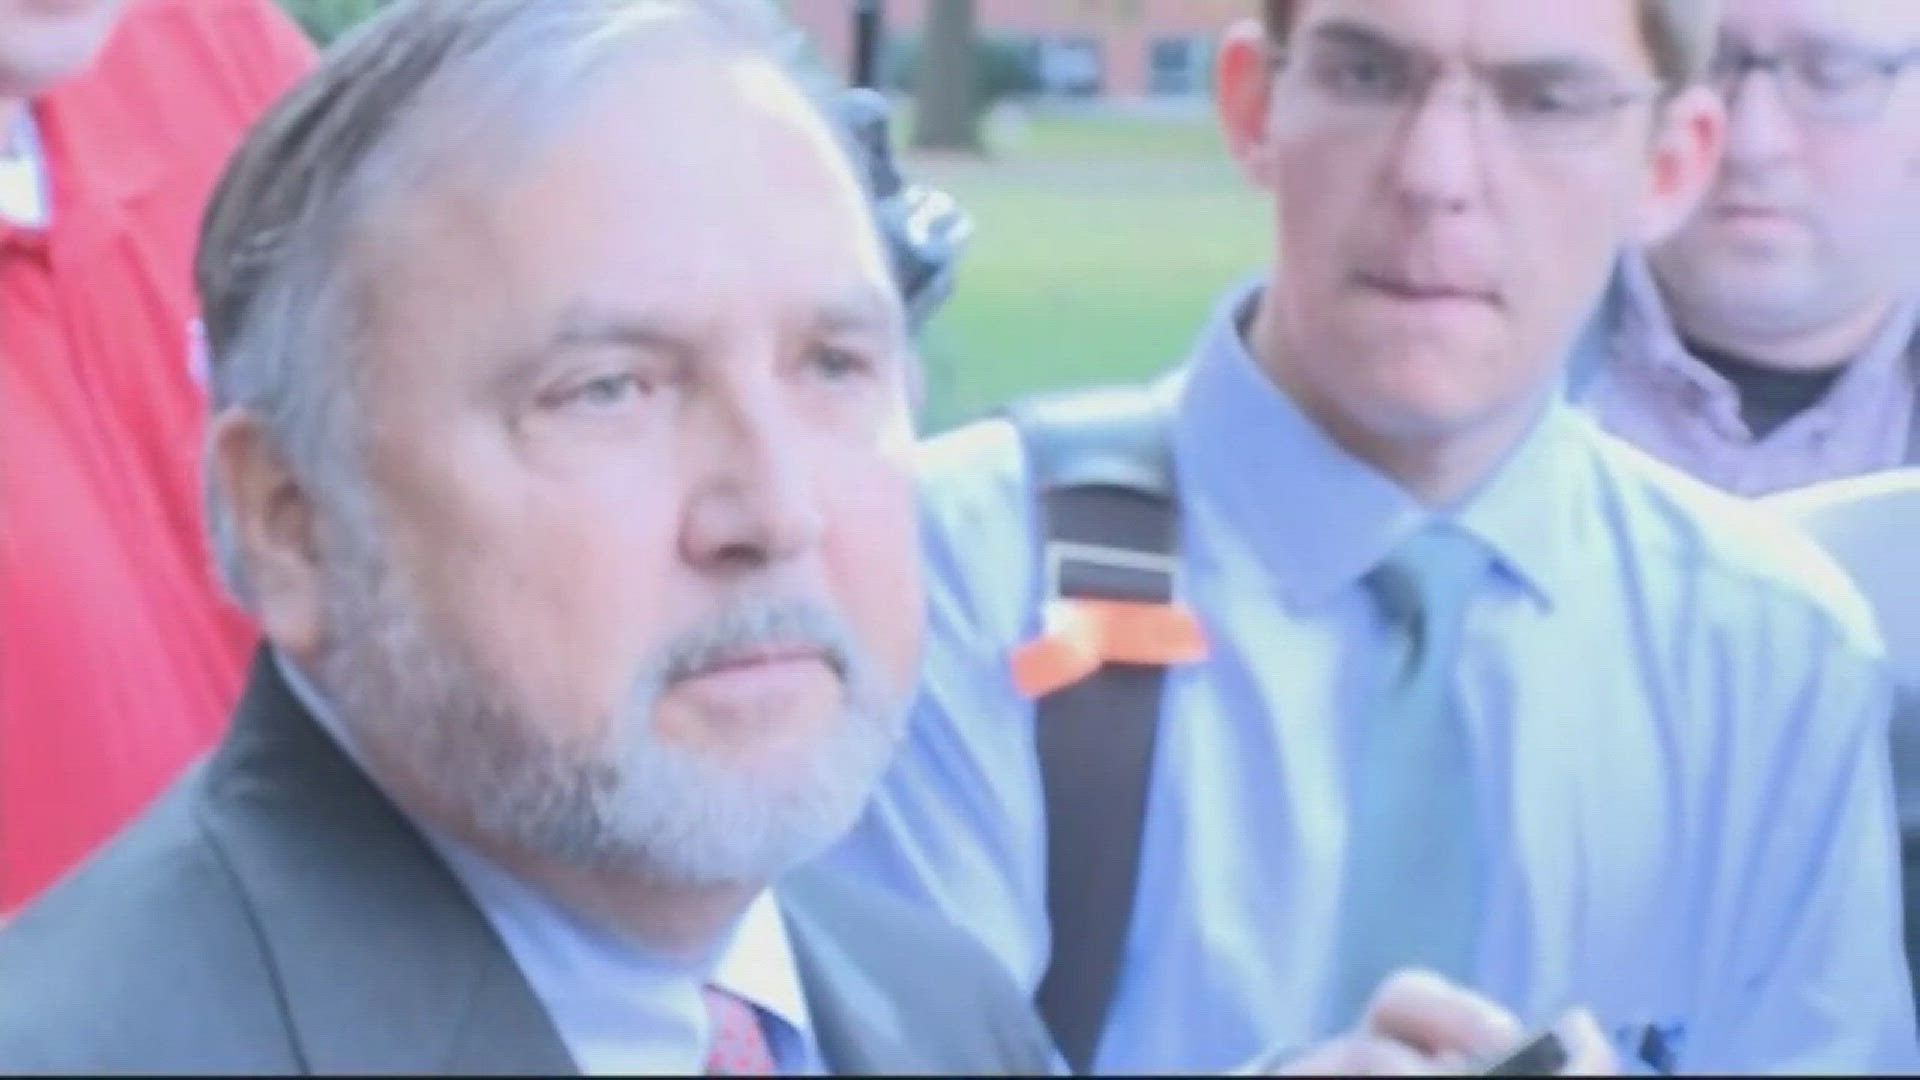 RAW VIDEO: Rick Pitino's lawyer makes statement after addressing ULAA board